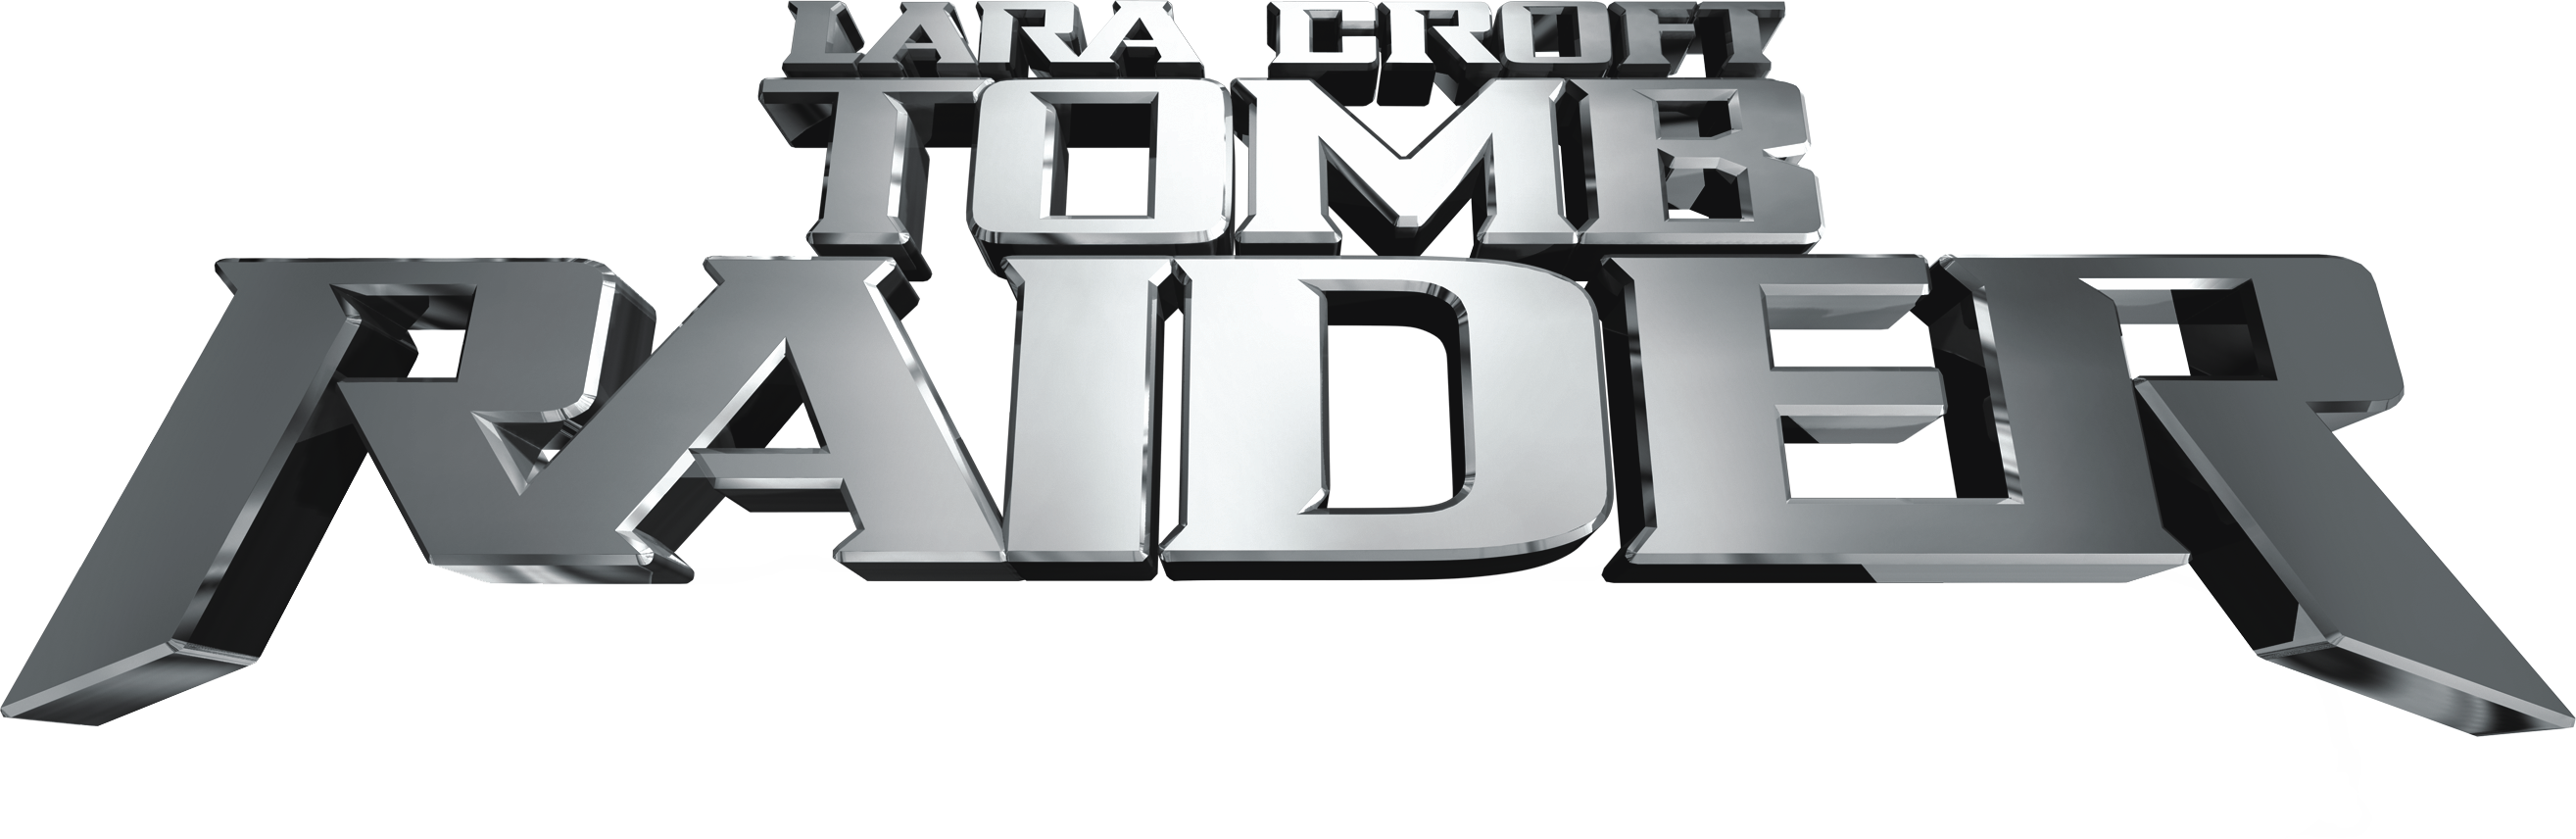 Tomb Raider Logo Clipart PNG Image